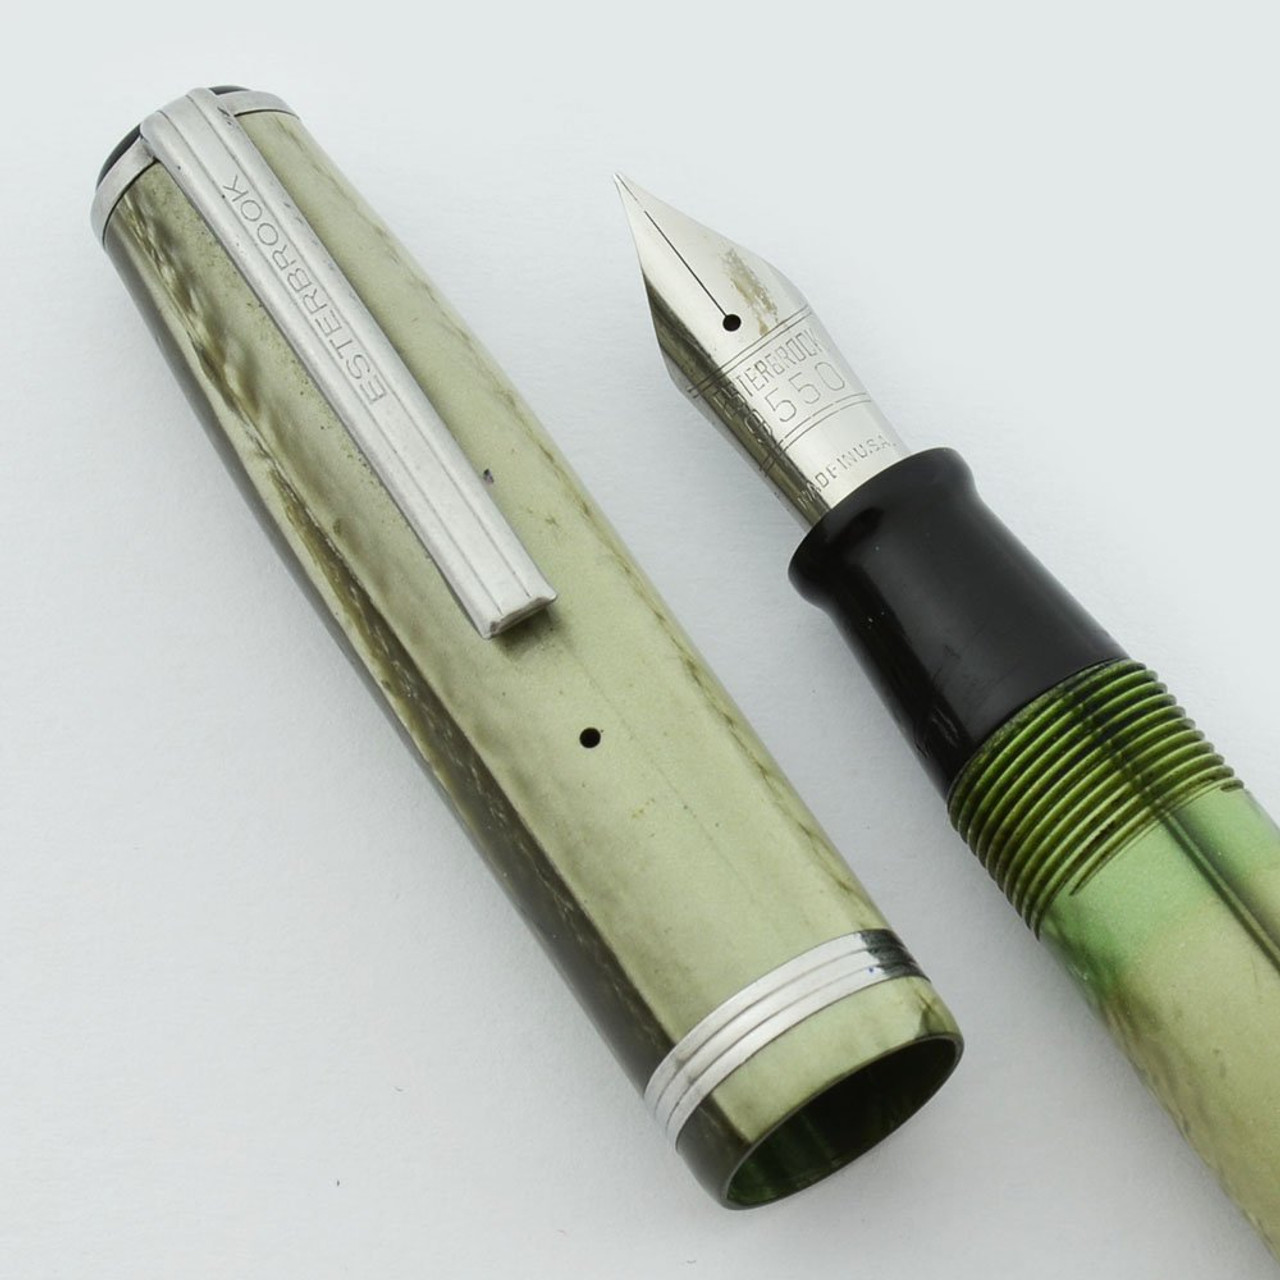 Esterbrook J Fountain Pen - Green, 9550 Extra Fine Nib (Excellent, Restored)